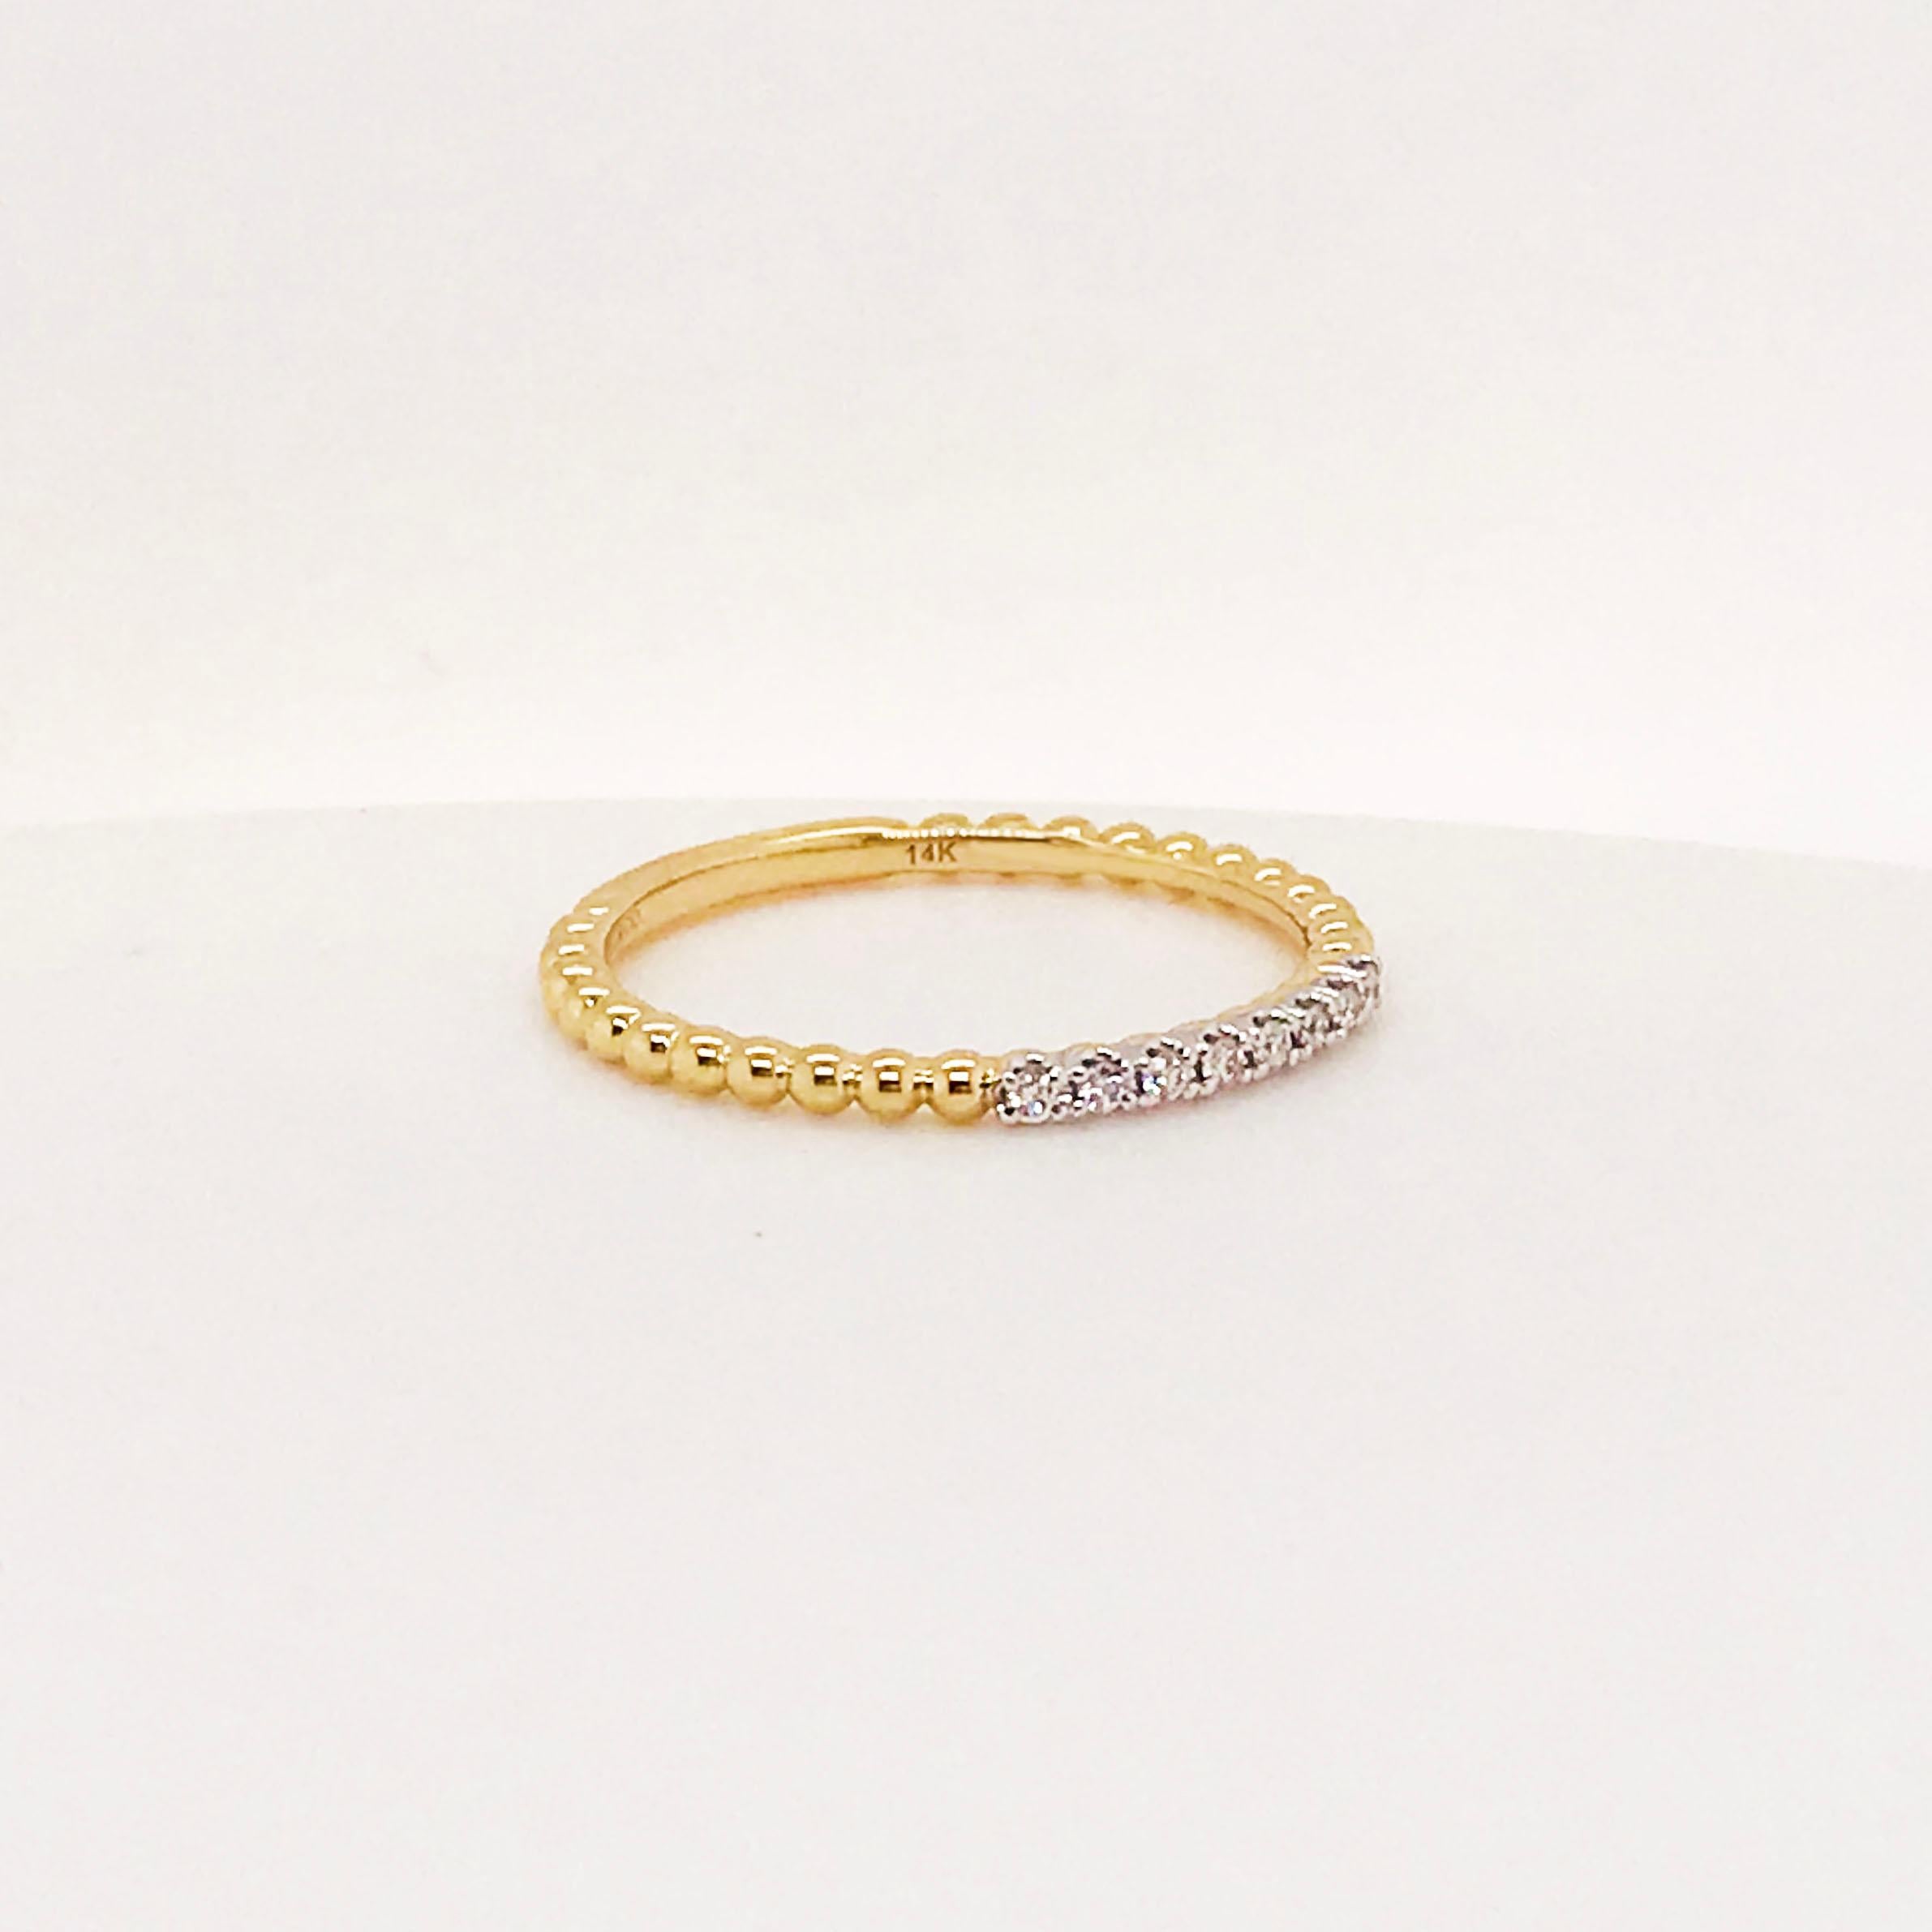 Artisan Diamond Stackable Ring, 14 Karat Yellow Gold Diamond Band with Beaded Texture